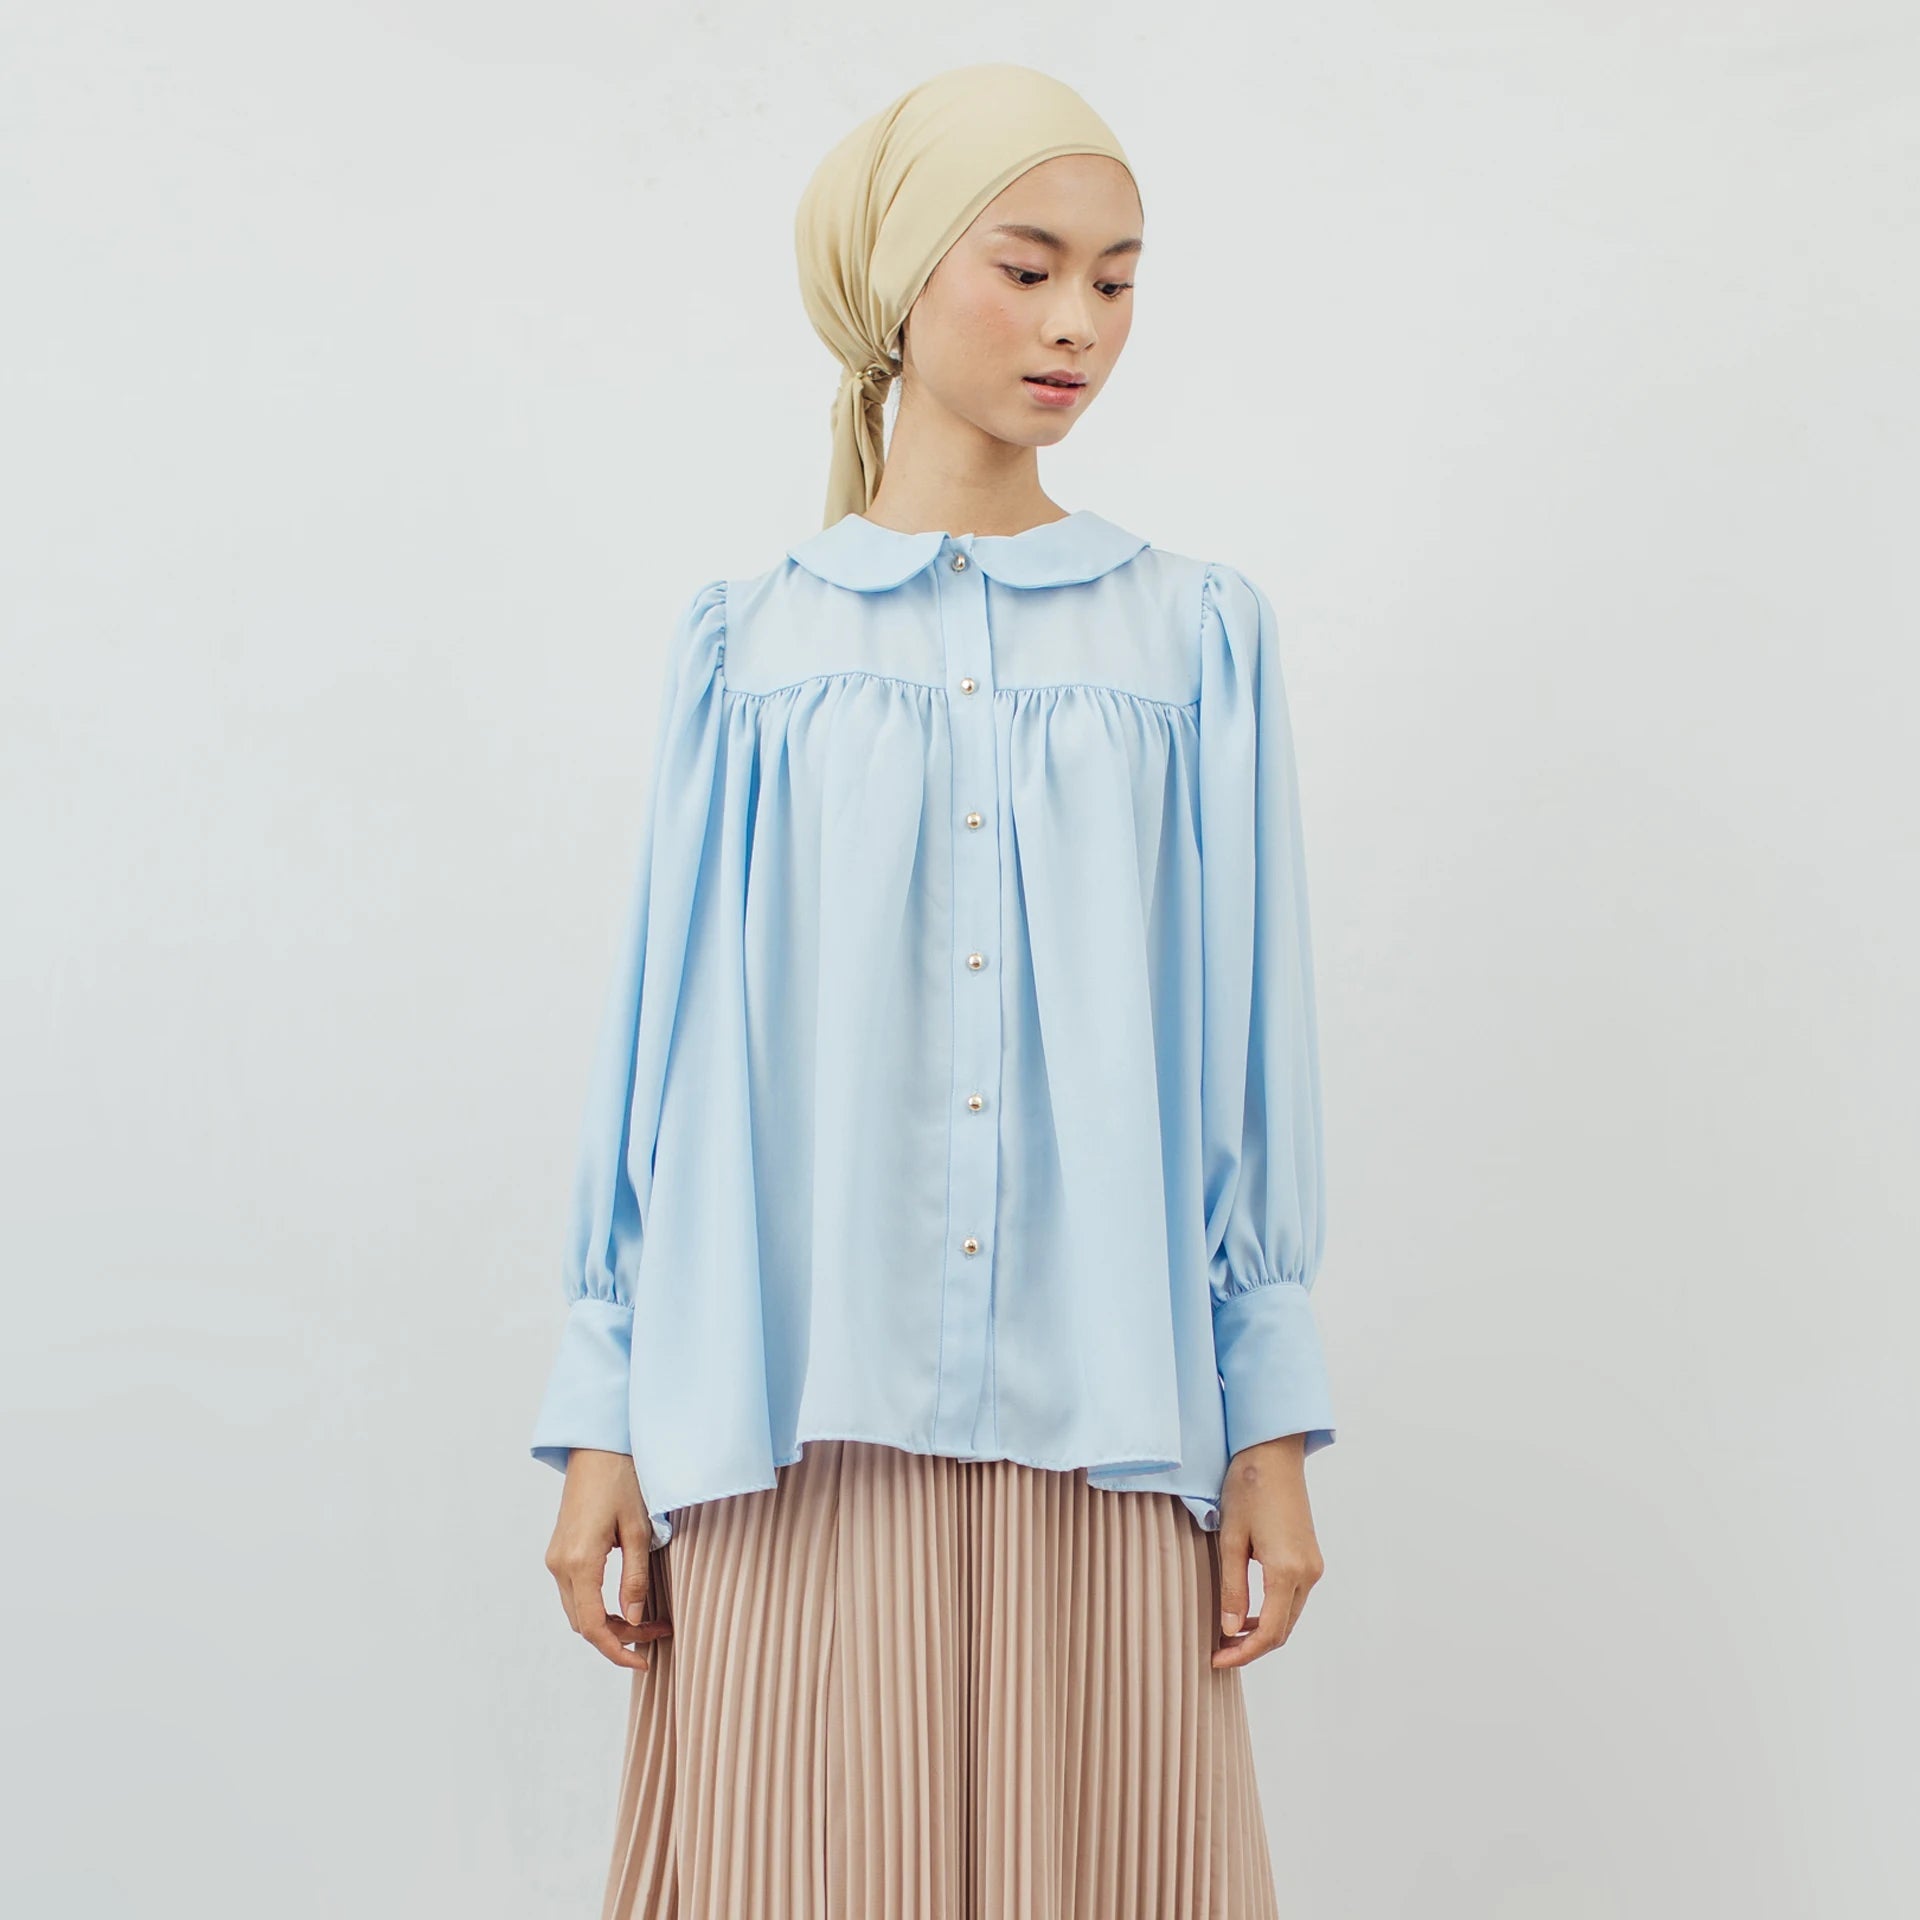 Vistula Blue Tops | HijabChic